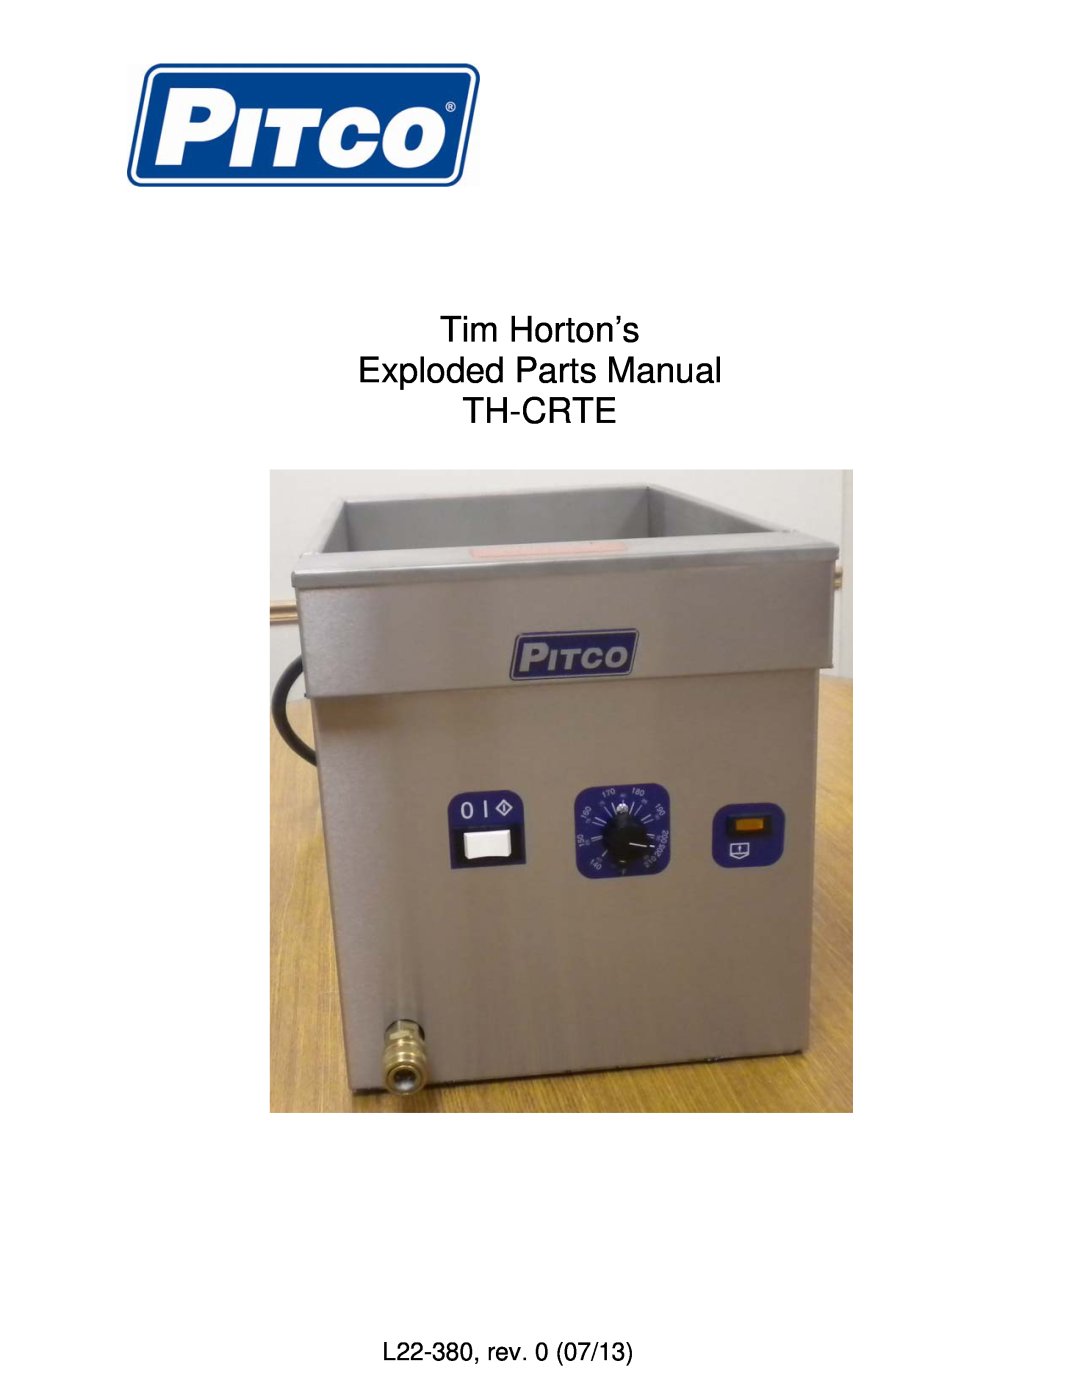 Pitco Frialator manual L22-380, rev. 0 07/13, Tim Horton’s Exploded Parts Manual TH-CRTE 